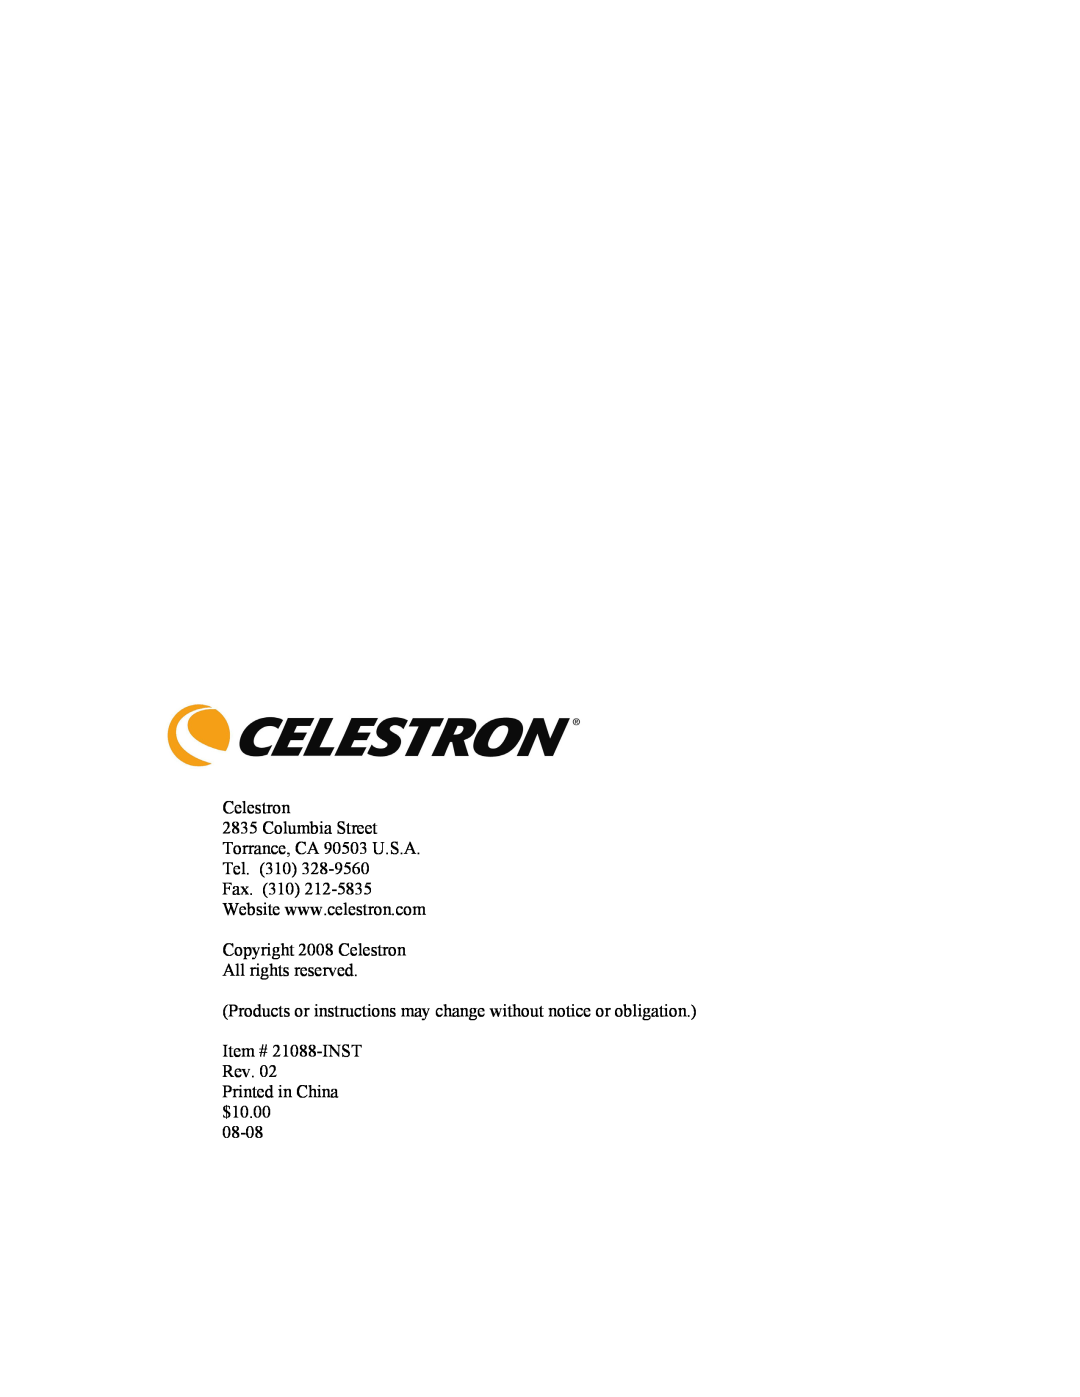 Celestron OMNI XLT 102 manual Celestron 2835 Columbia Street Torrance, CA 90503 U.S.A. Tel. 310 